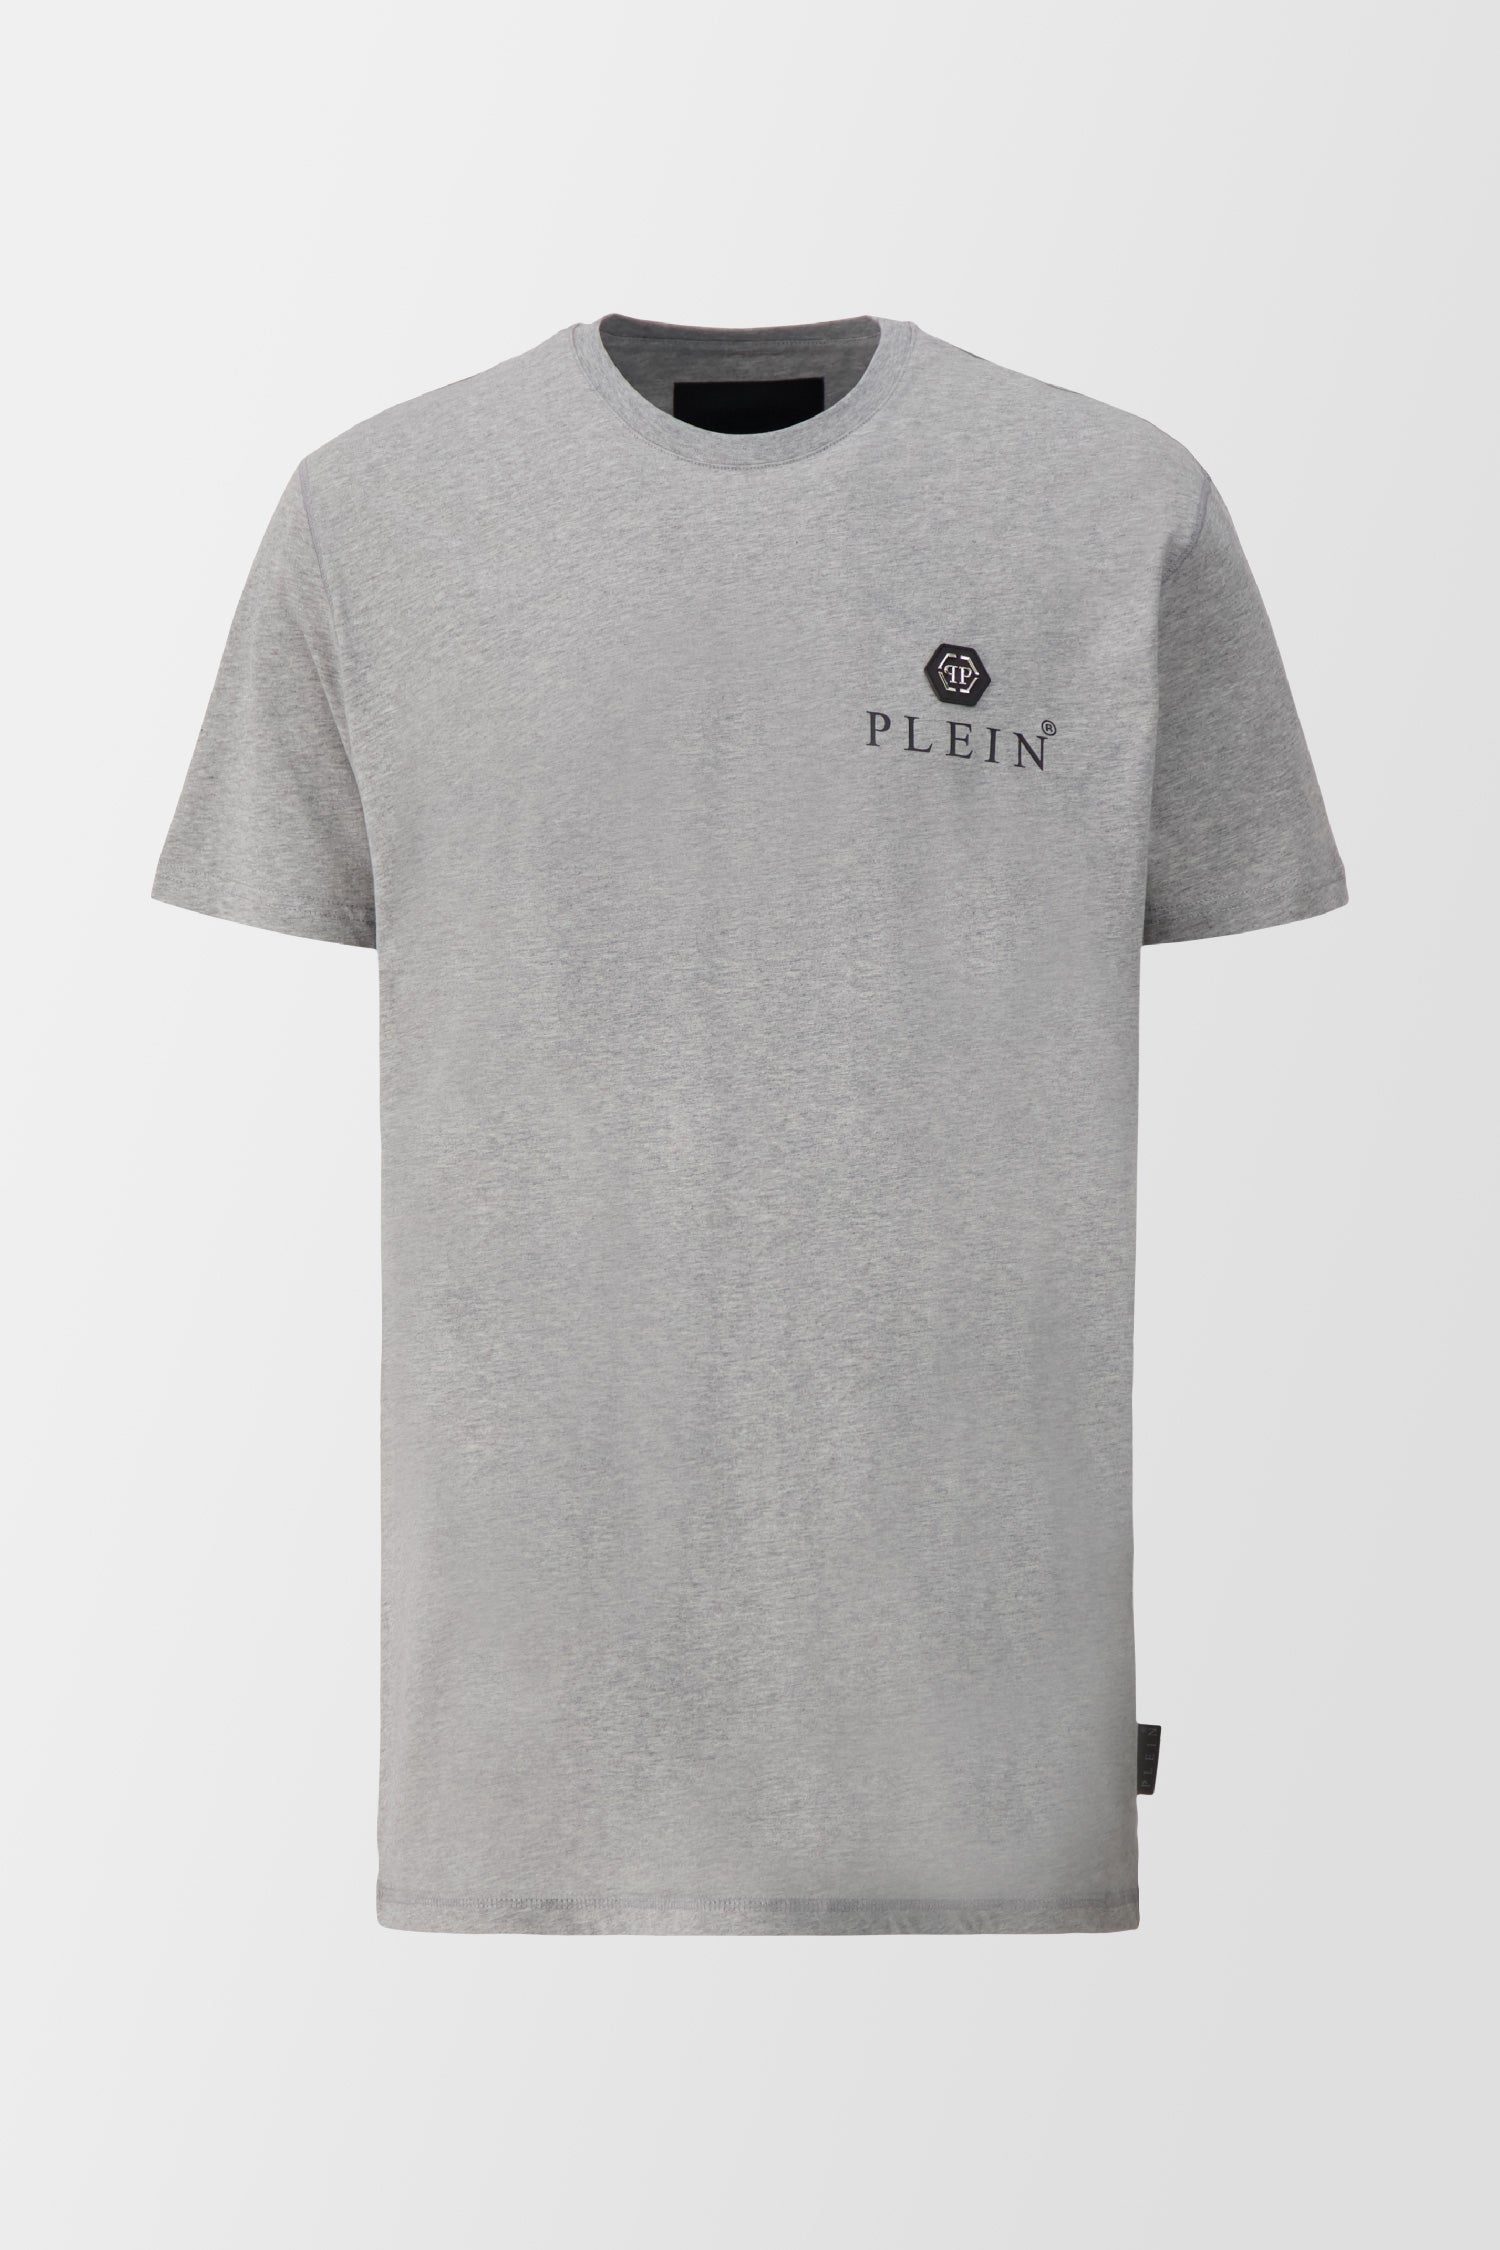 Philipp Plein Grey Iconic Plein T-Shirt